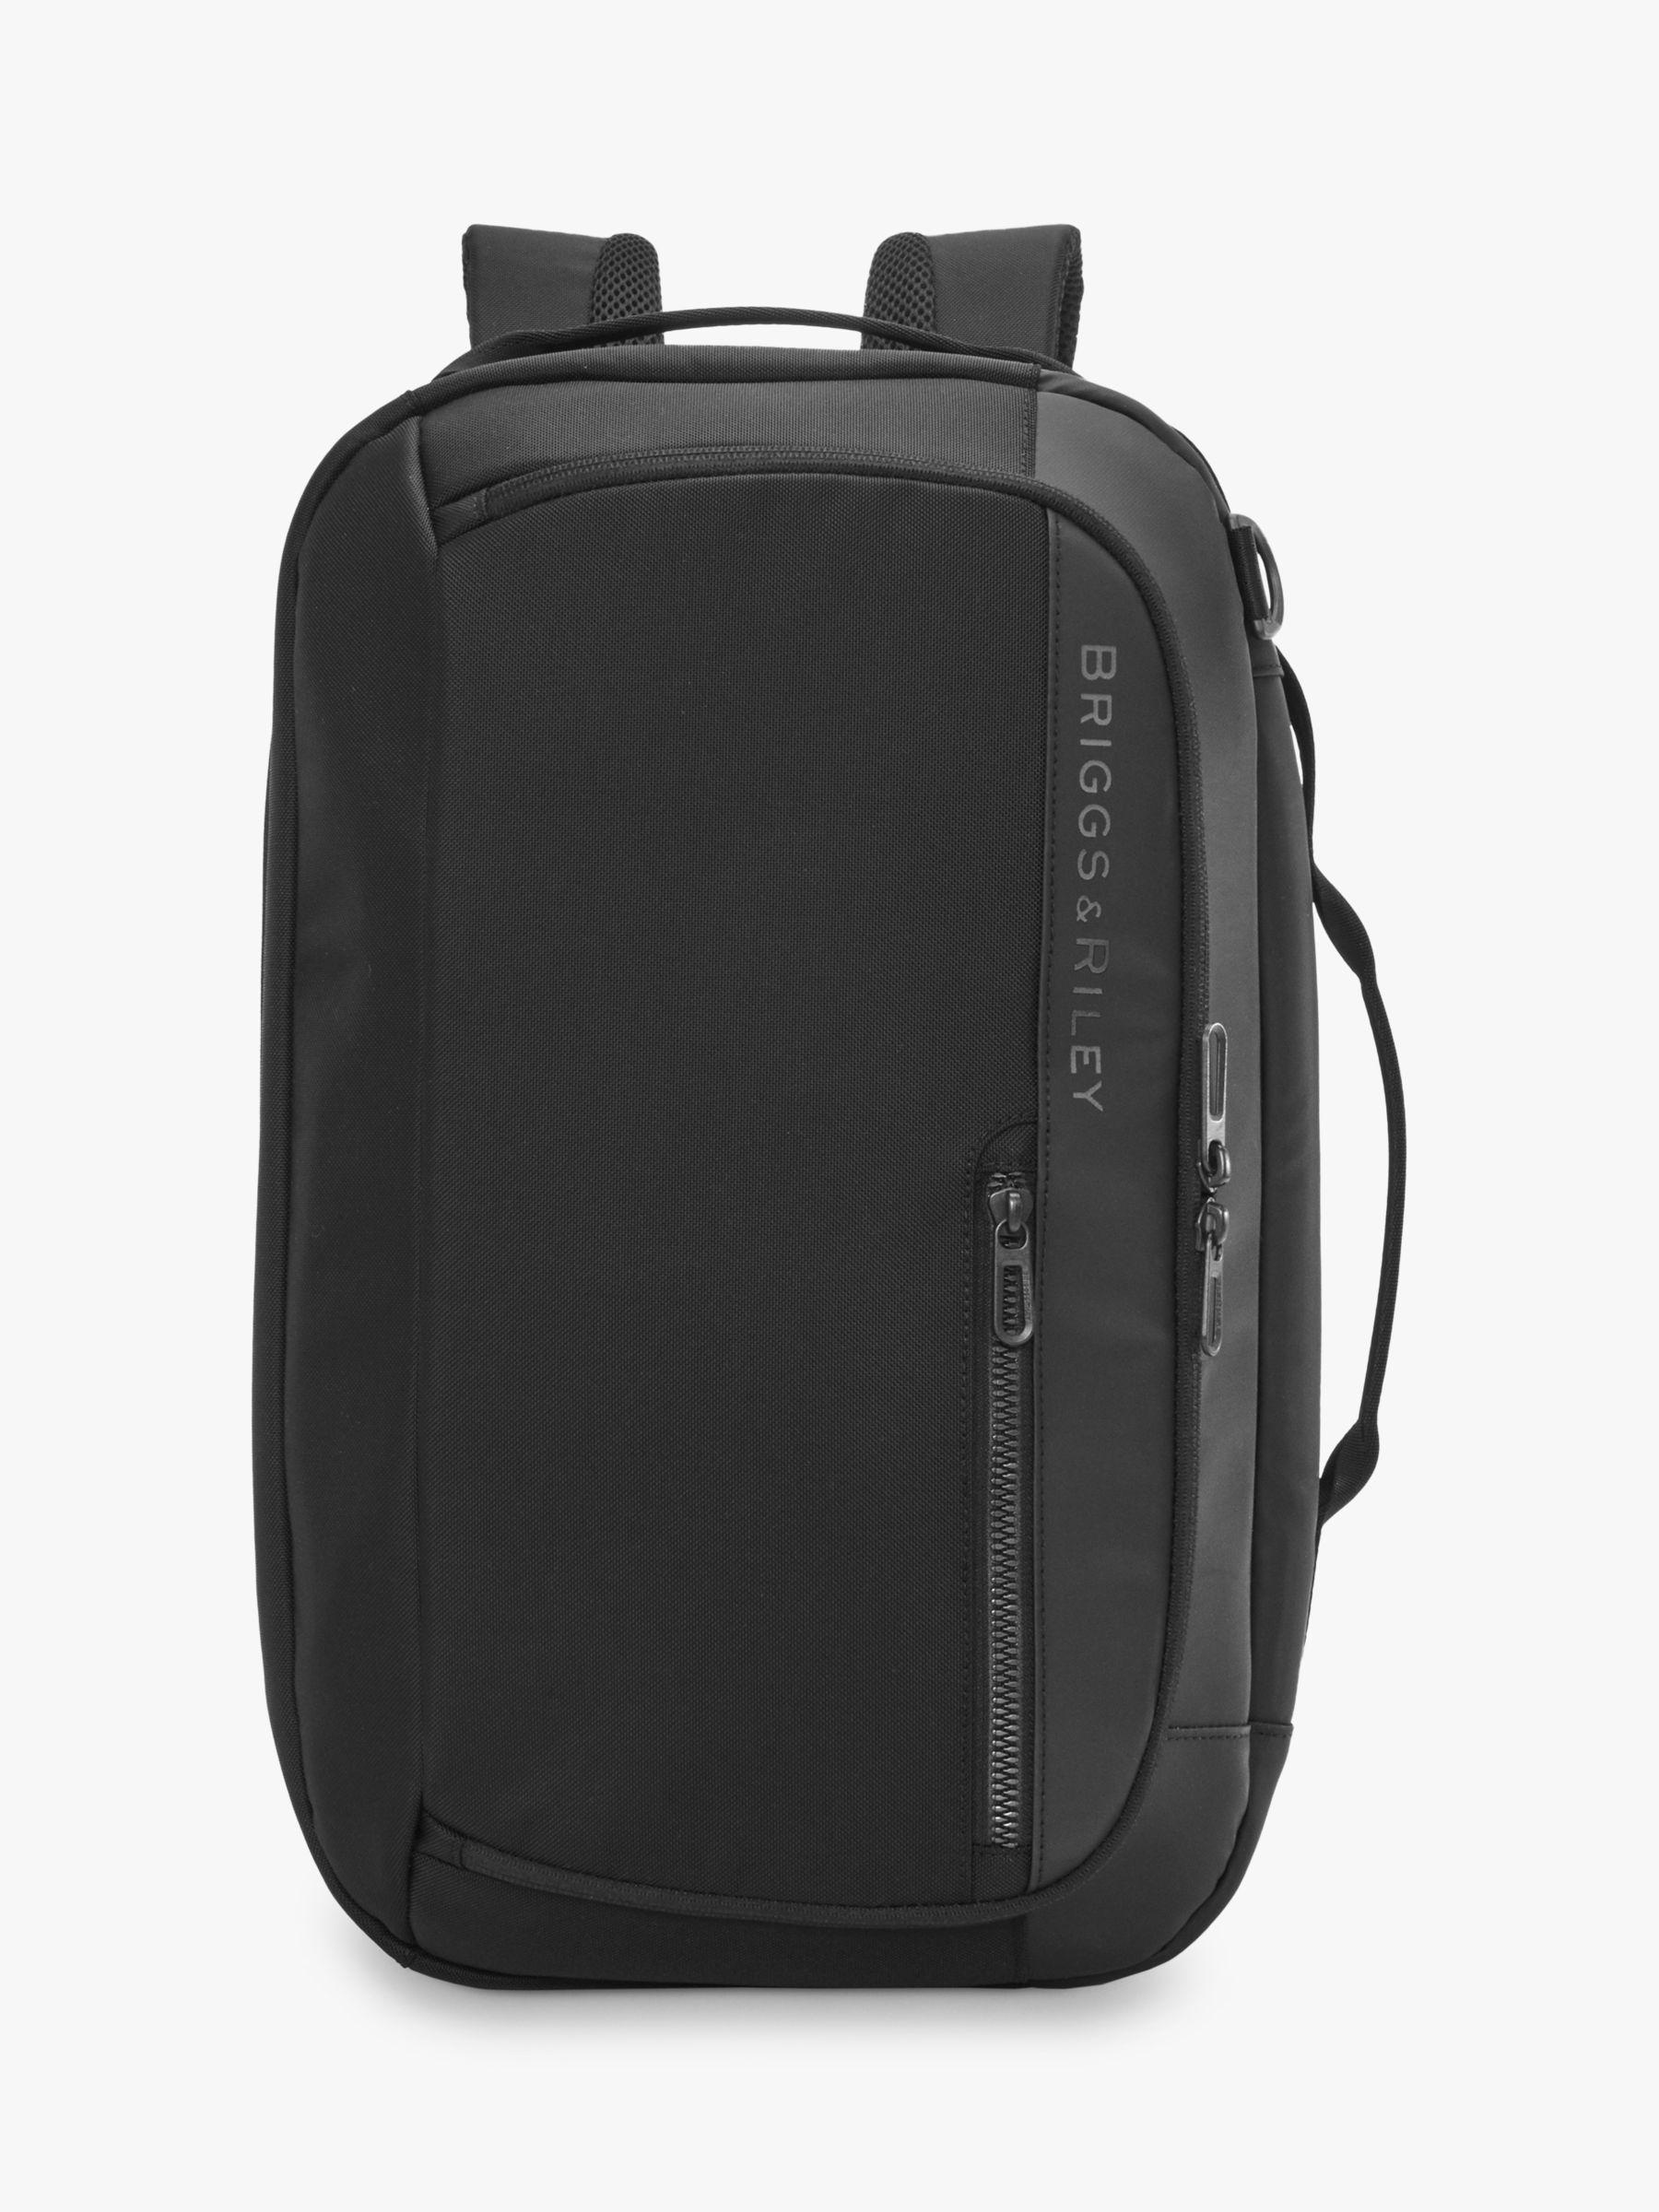 Briggs & Riley ZDX Convertible Duffle Backpack at John Lewis & Partners